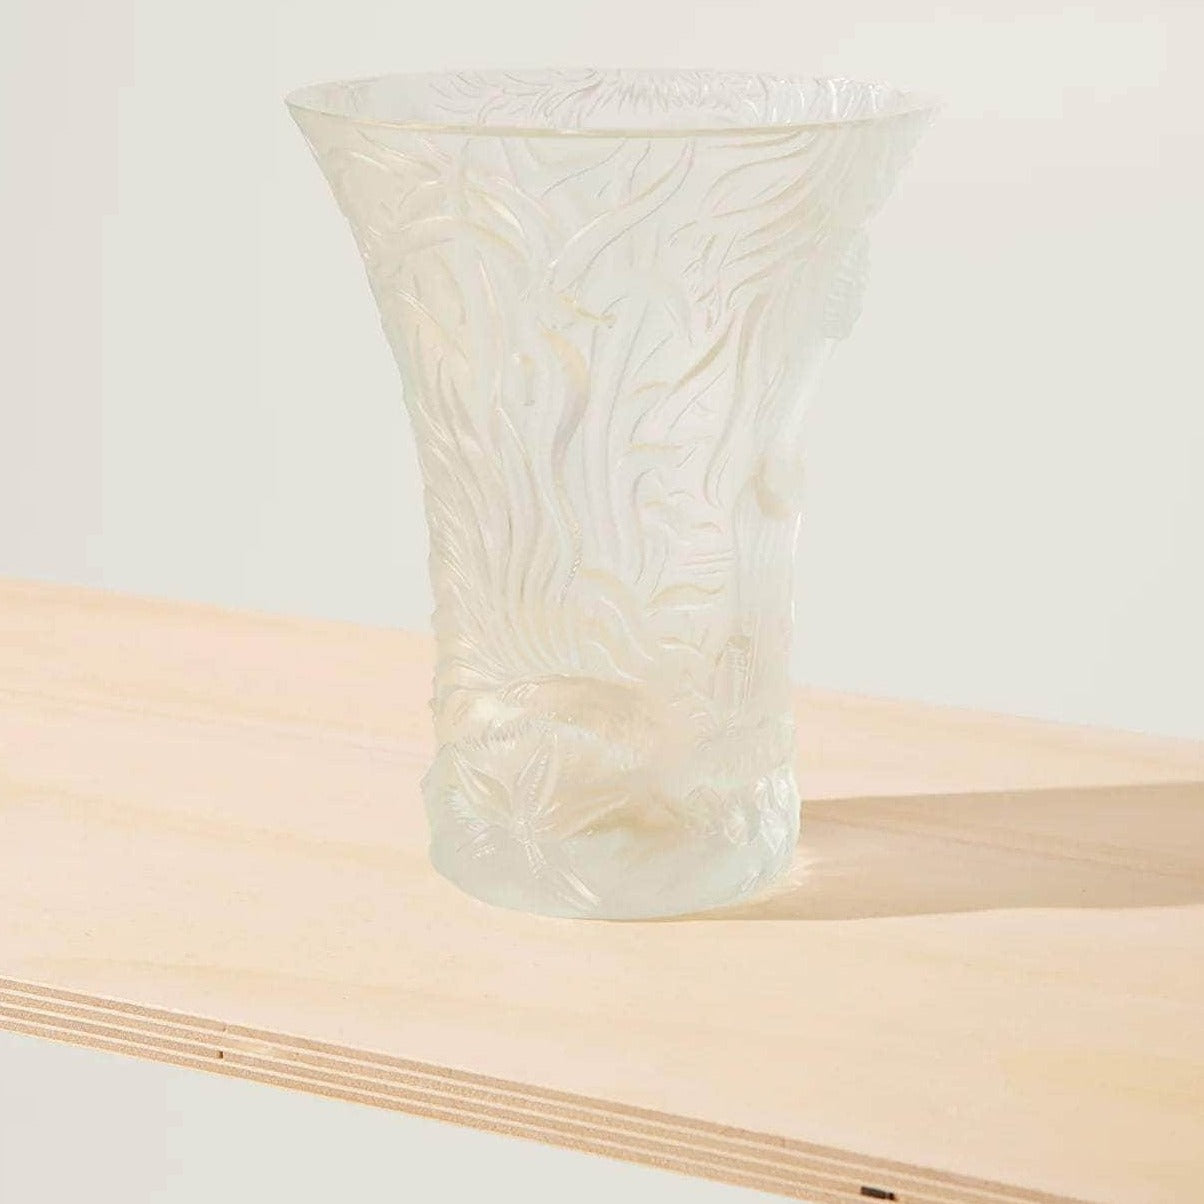 Michael Lagoon Vase Clear